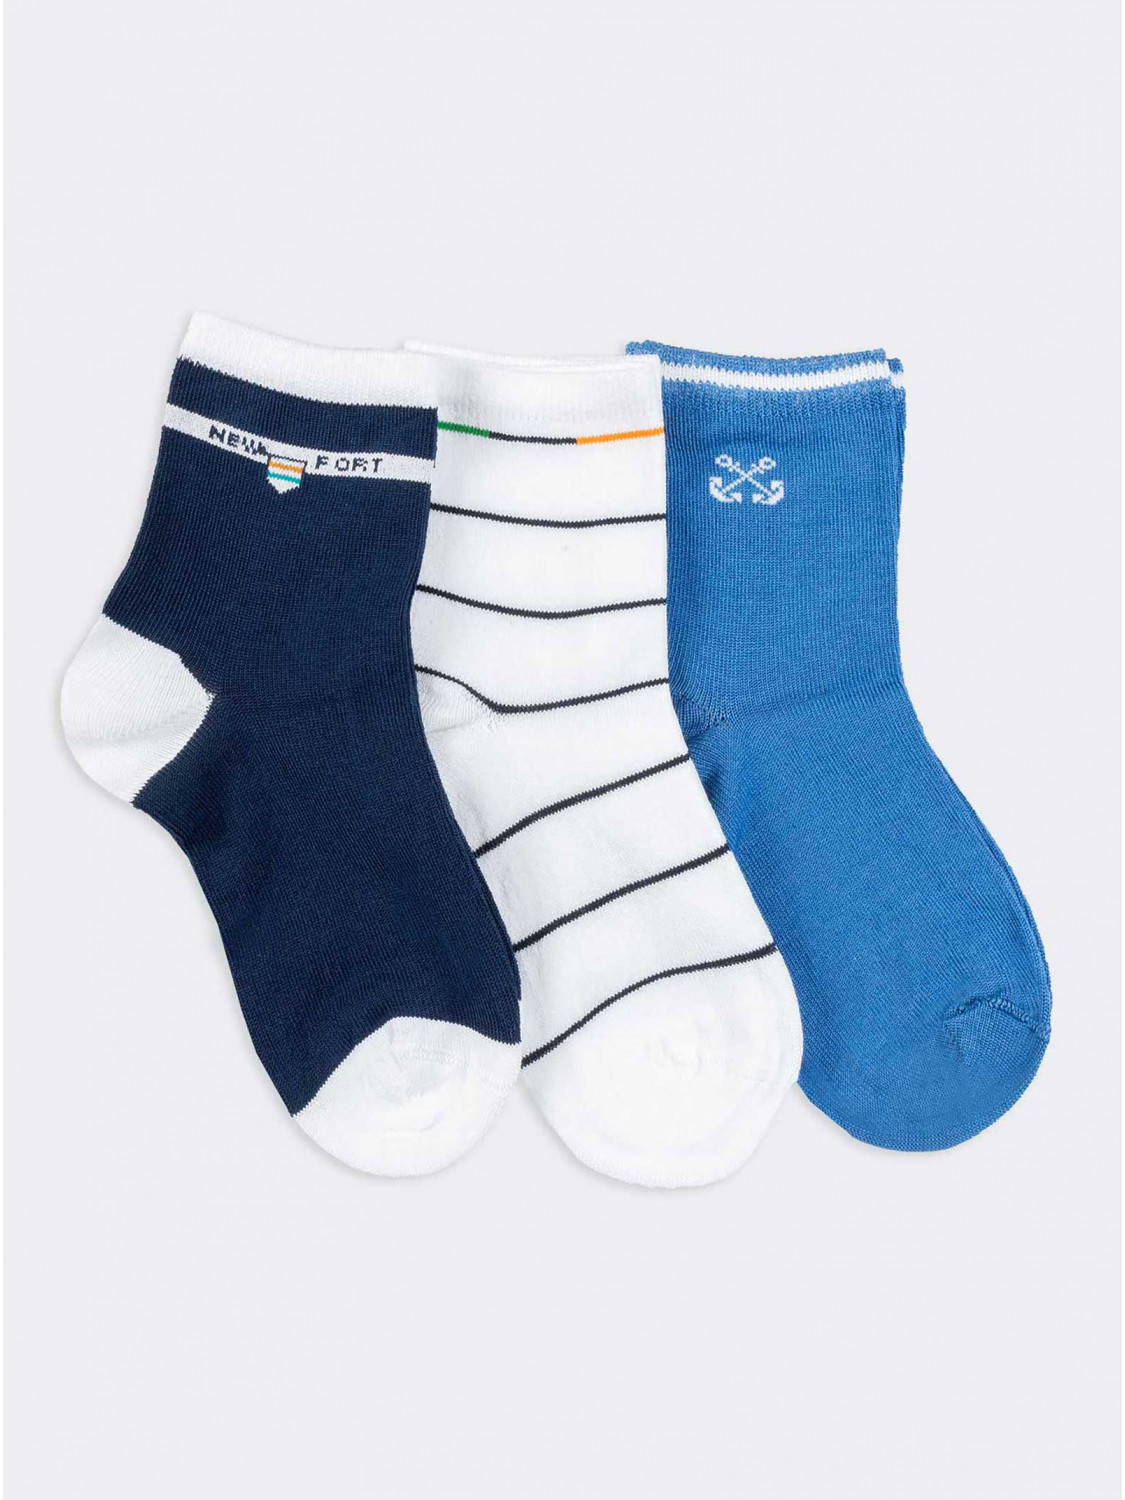 Tris short socks baby new port pattern